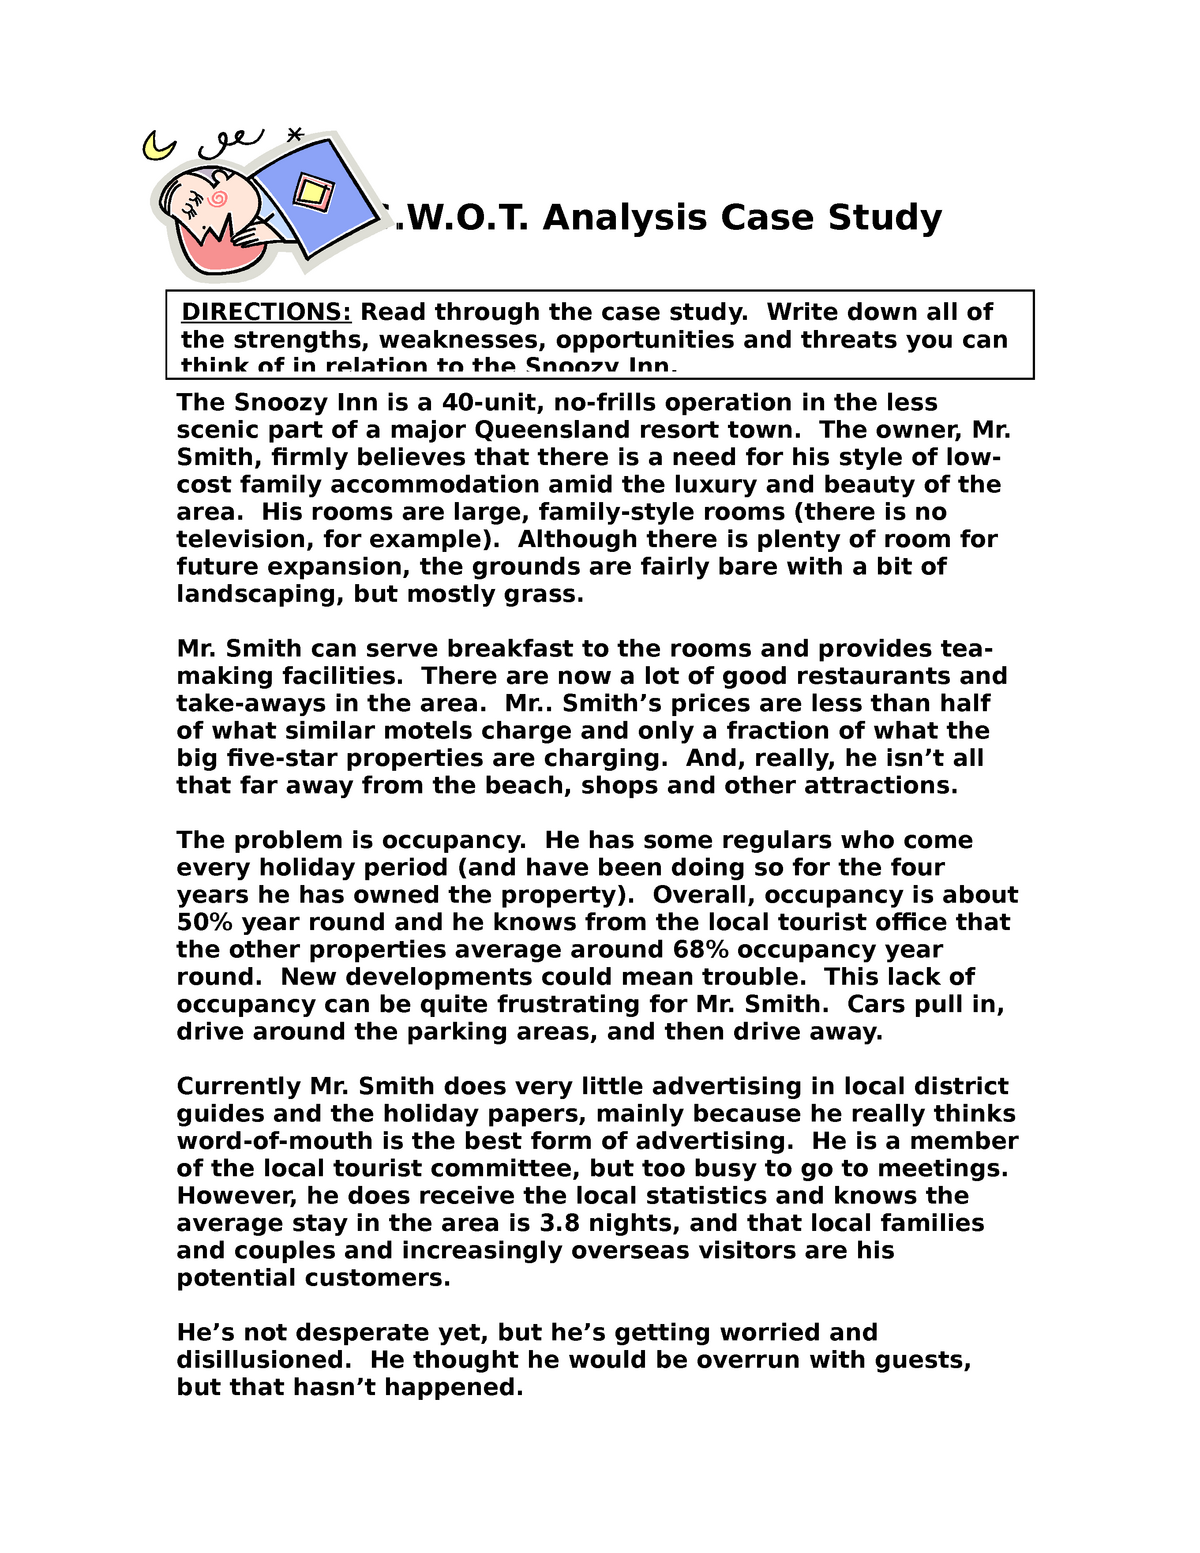 swot analysis case study snoozy inn